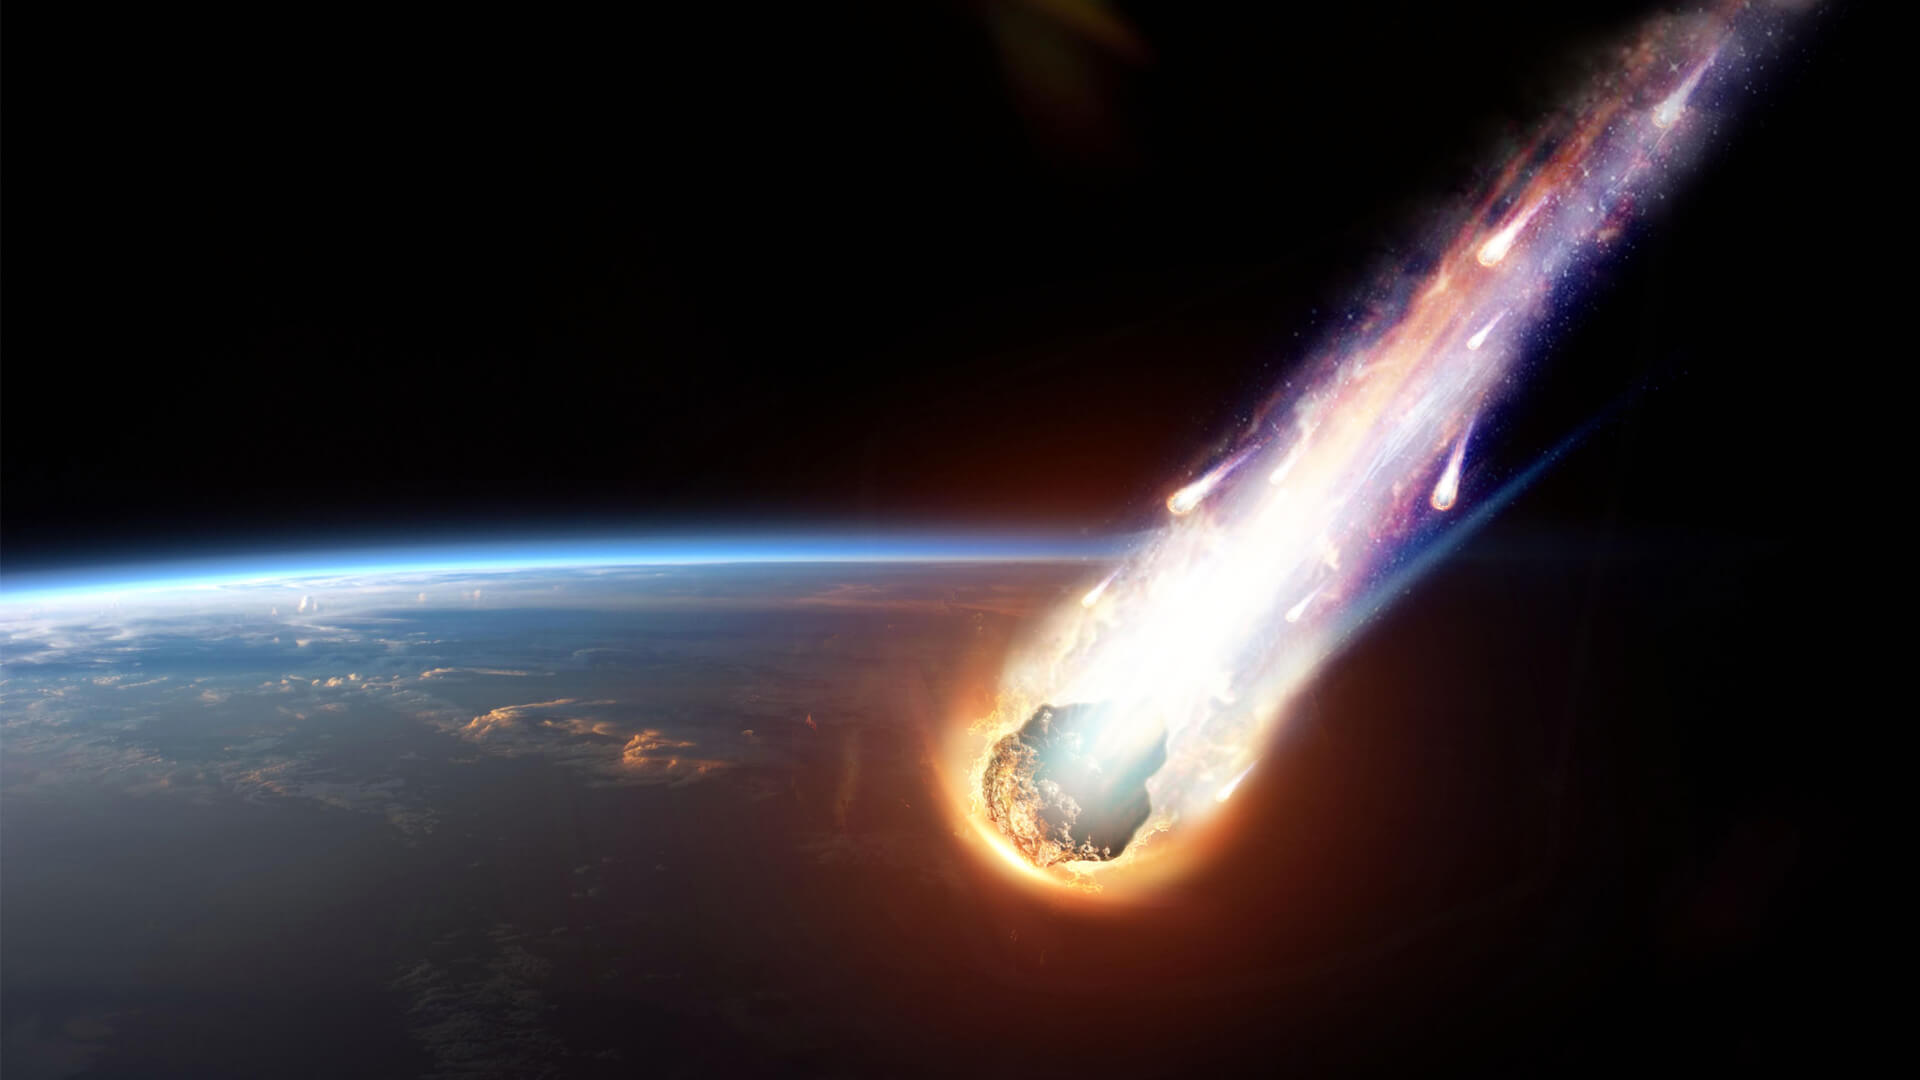 Kan en meteor forårsage brand?